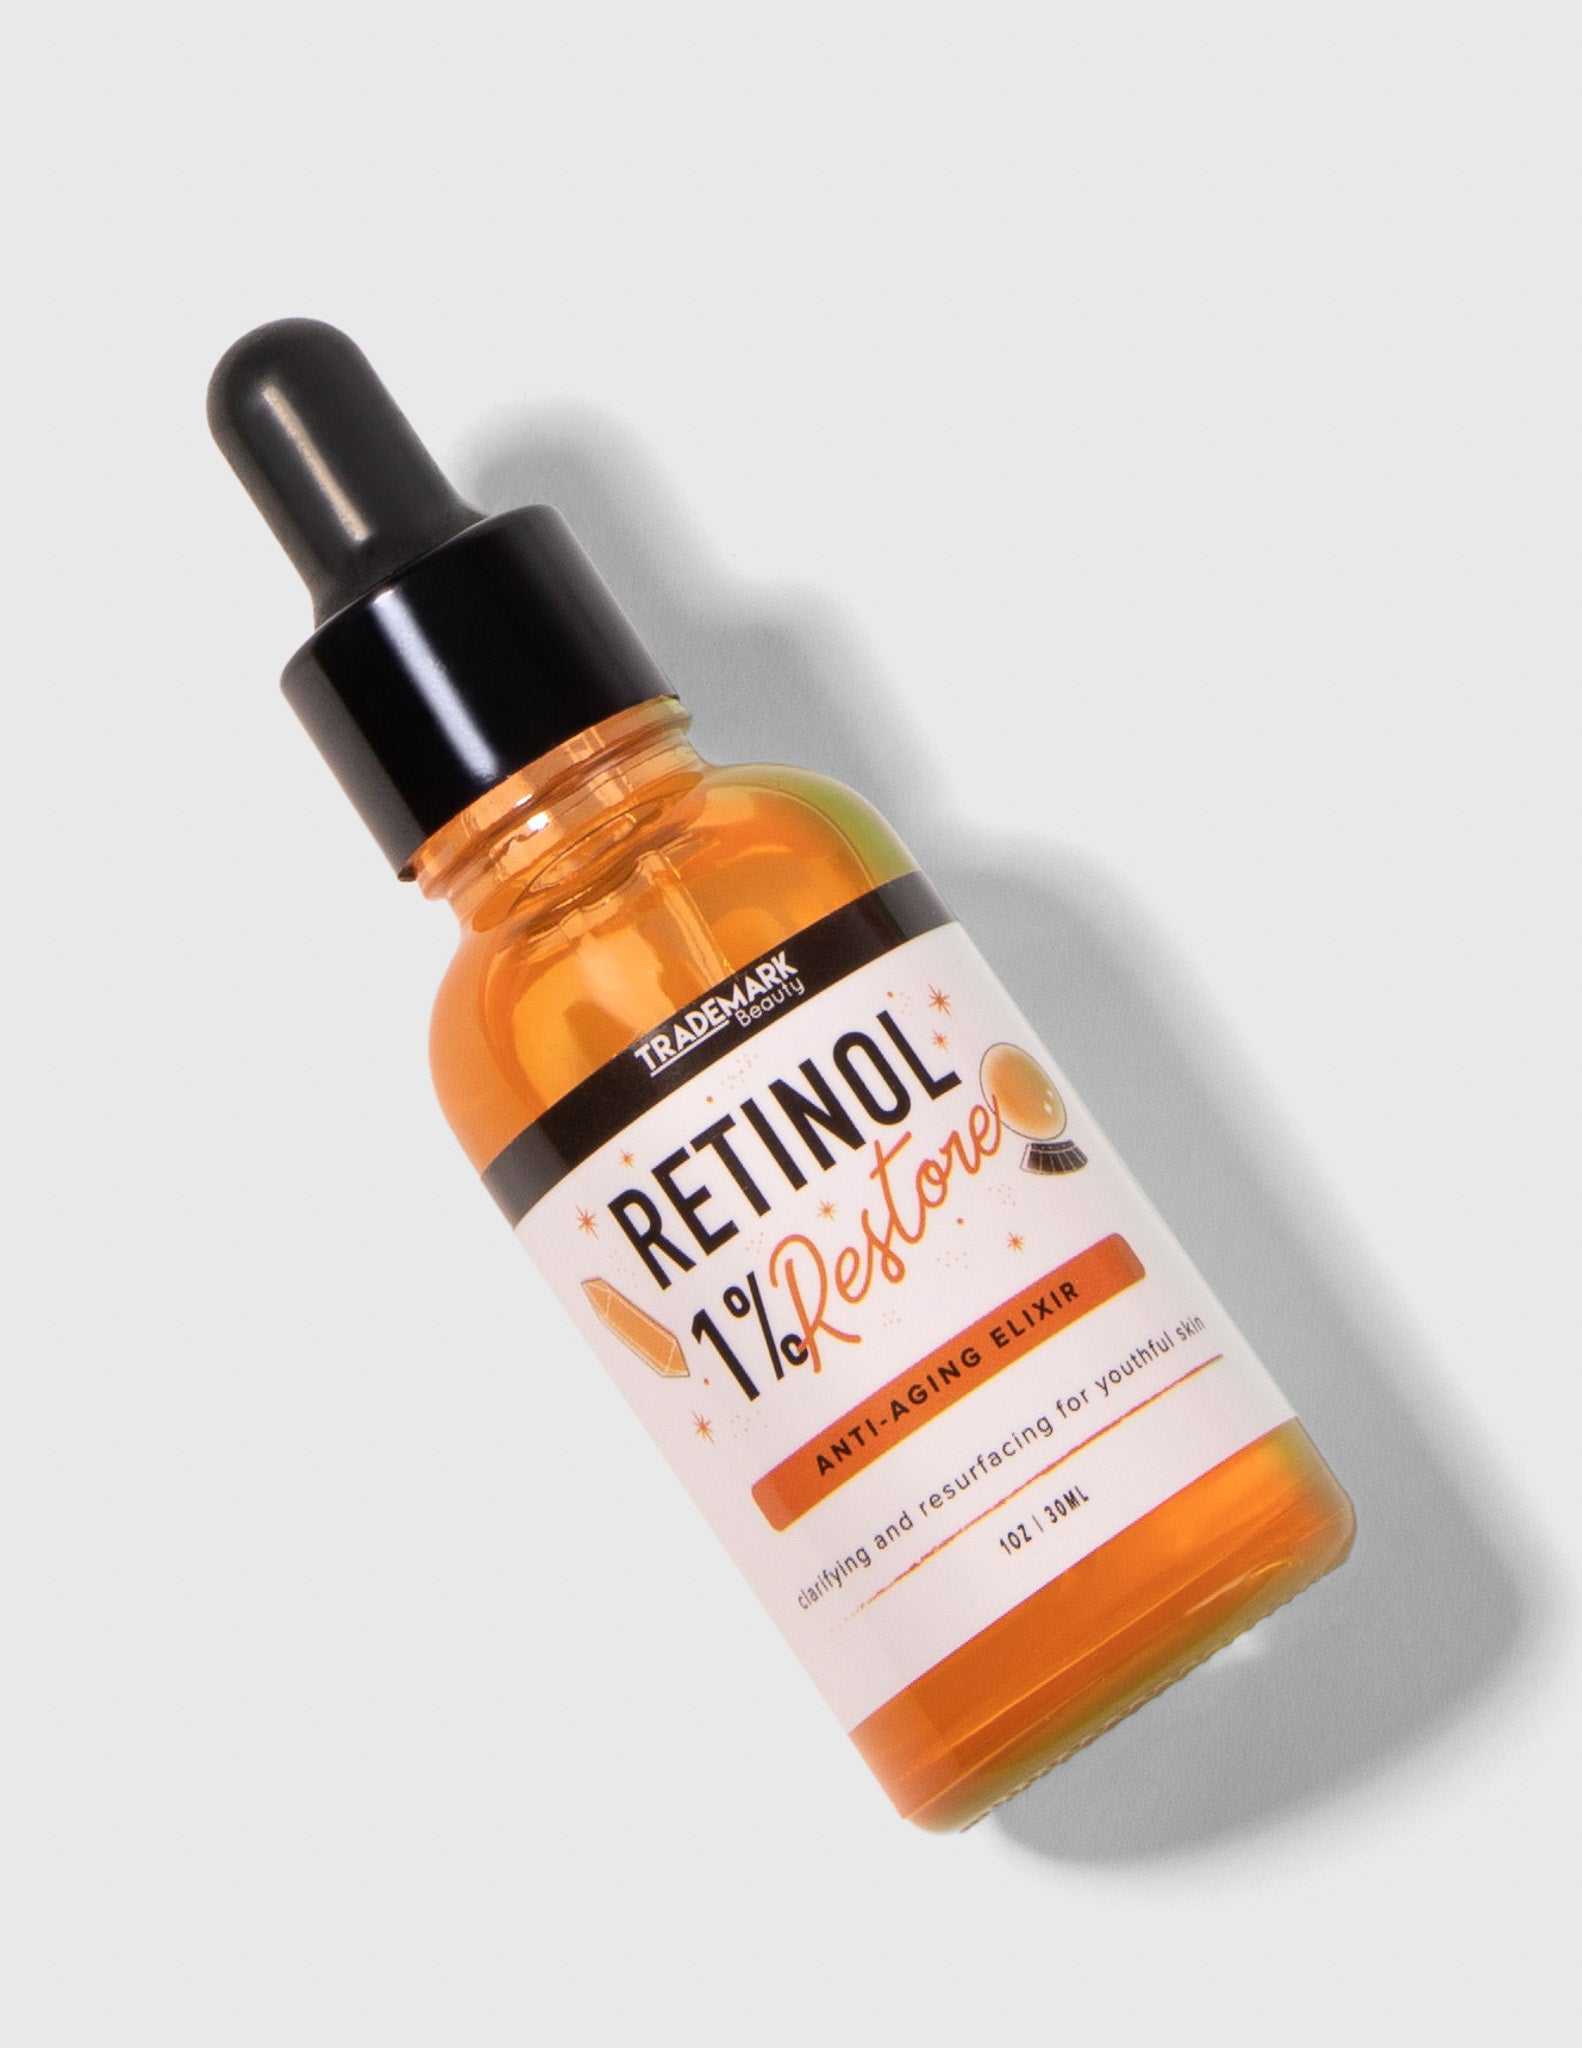 Retinol 1% Daily Elixir Serum - Trademark Beauty